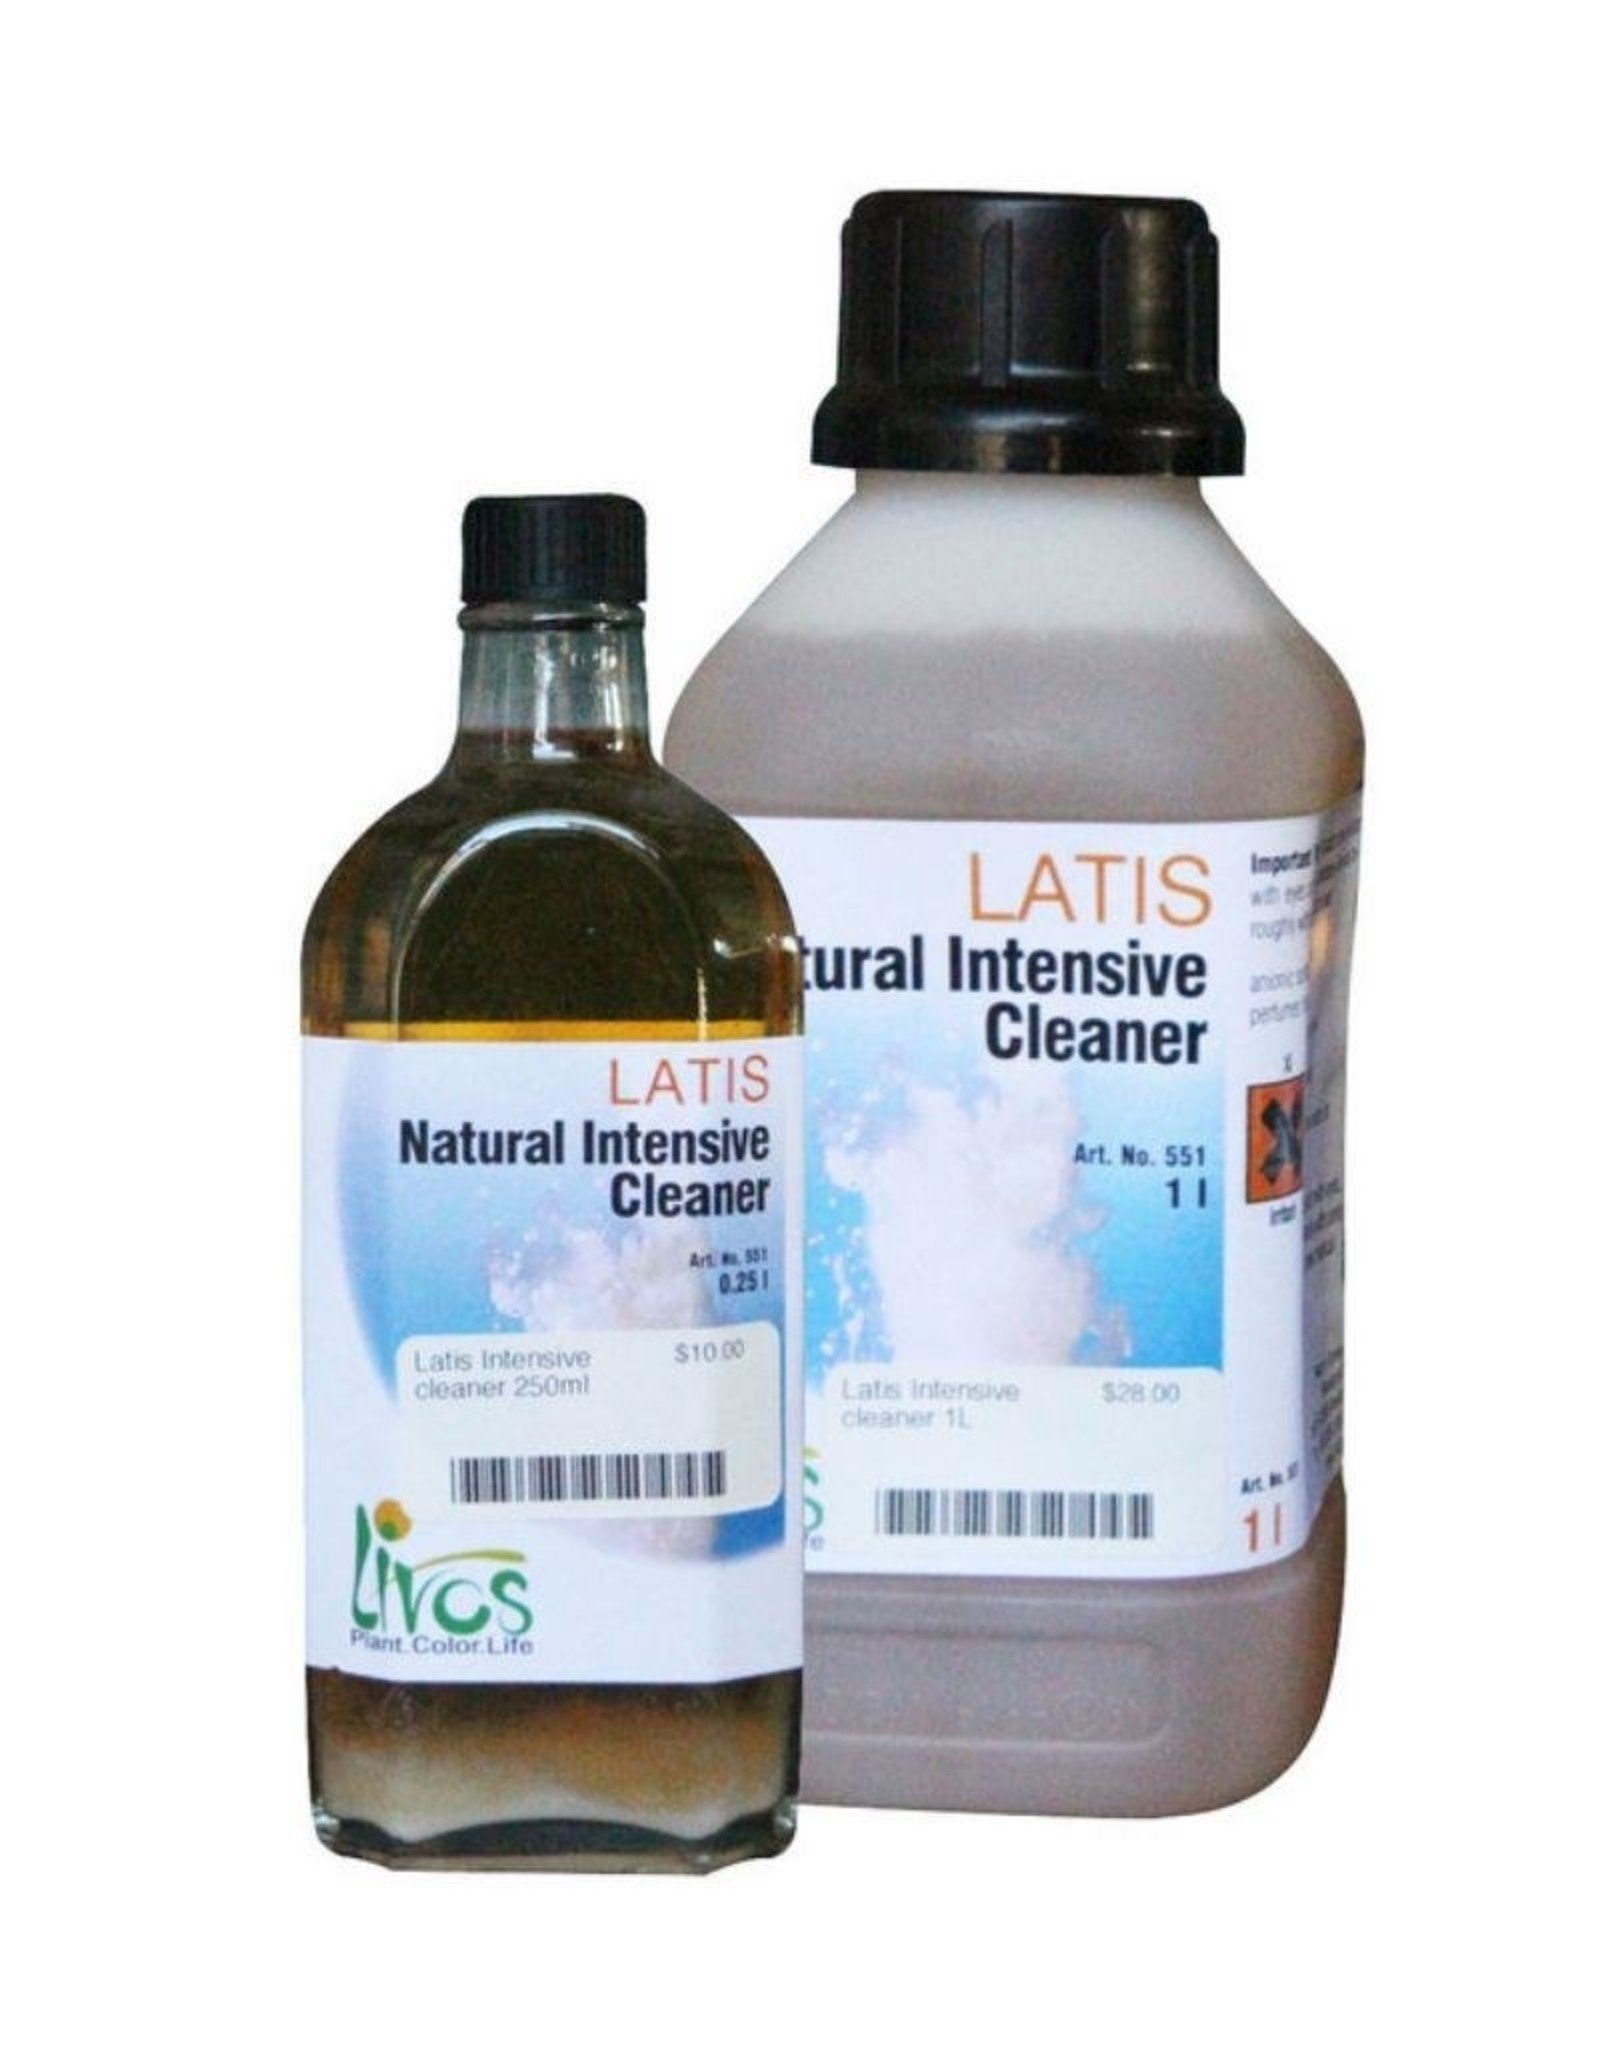 LIVOS Latis Intensive cleaner